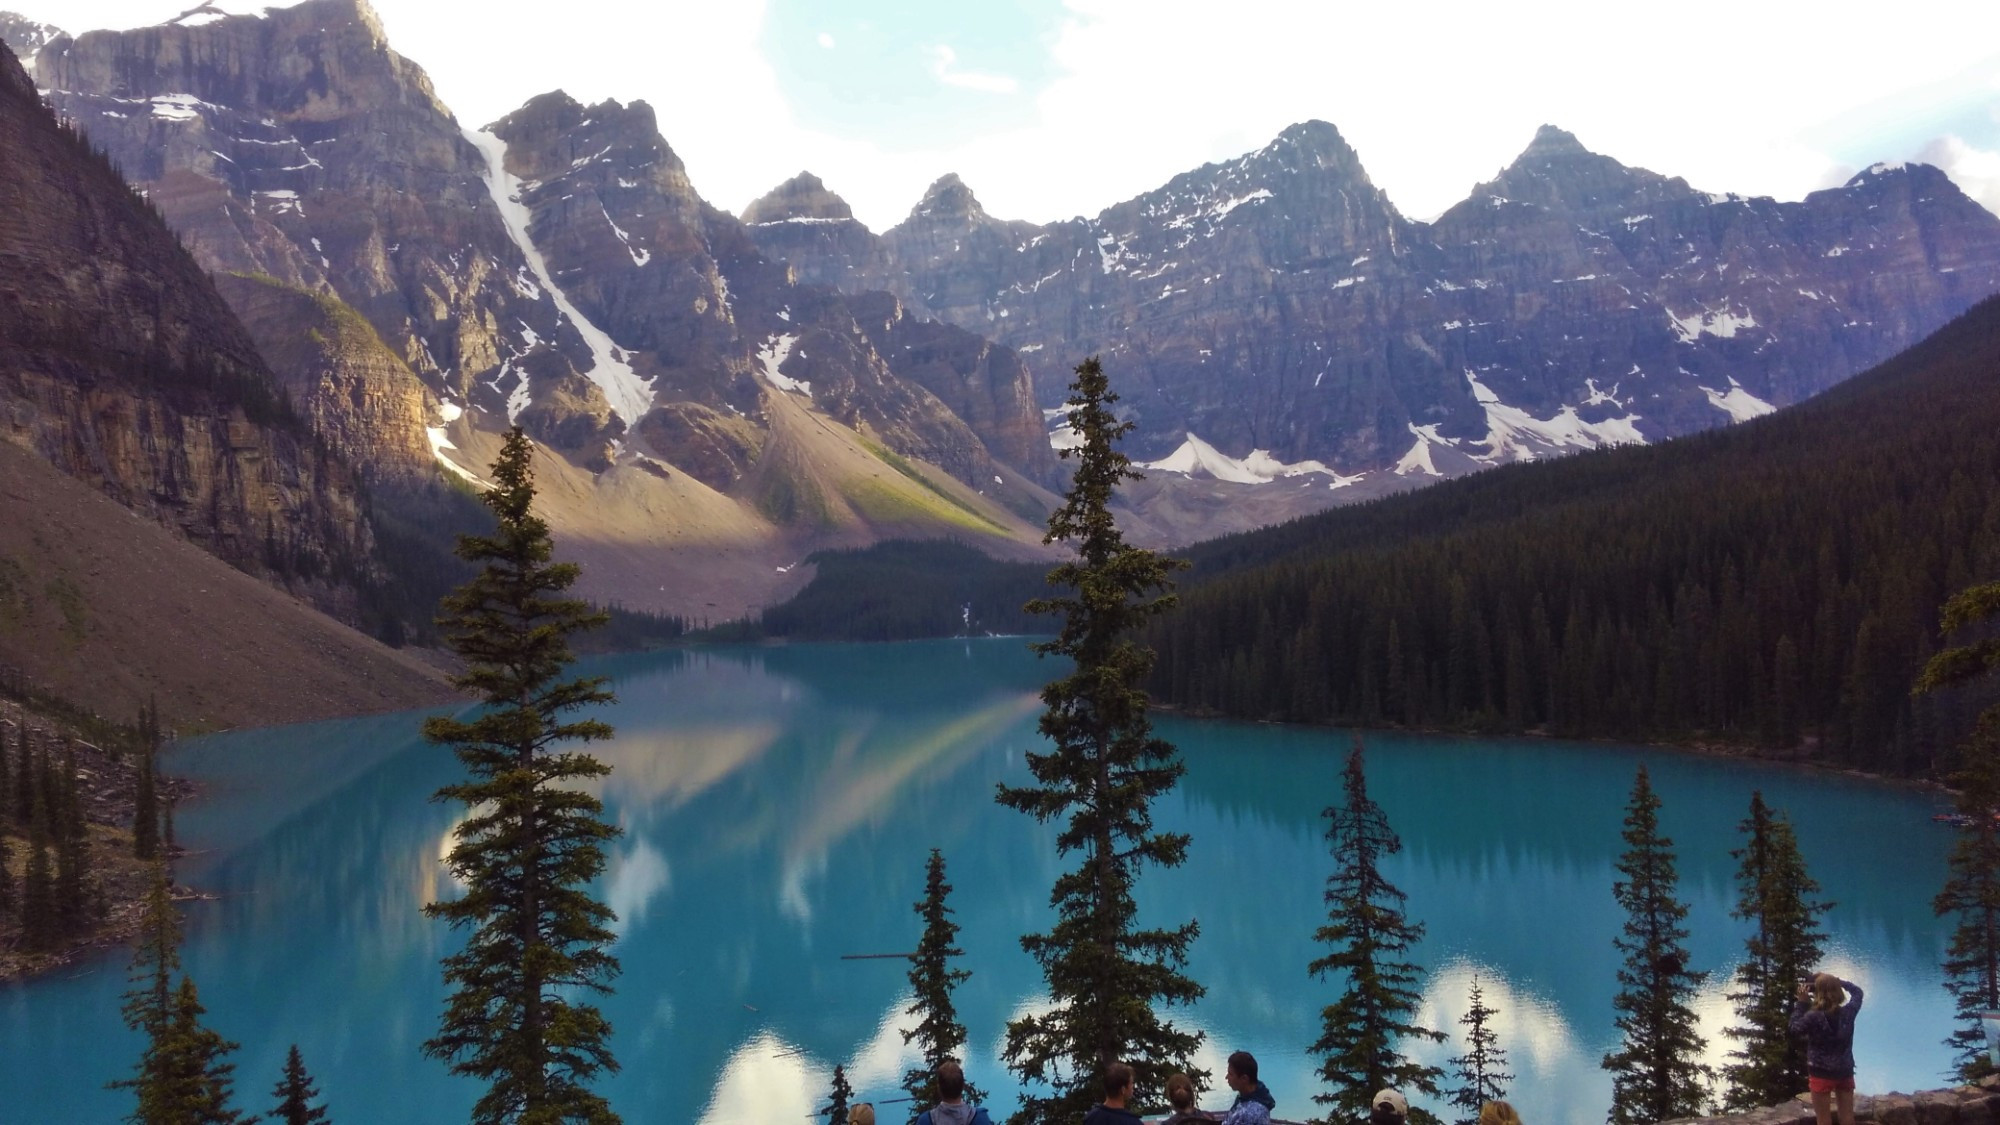 Valley of Ten Peaks — Moraine Lake in Banff National Park, Alberta, Canada